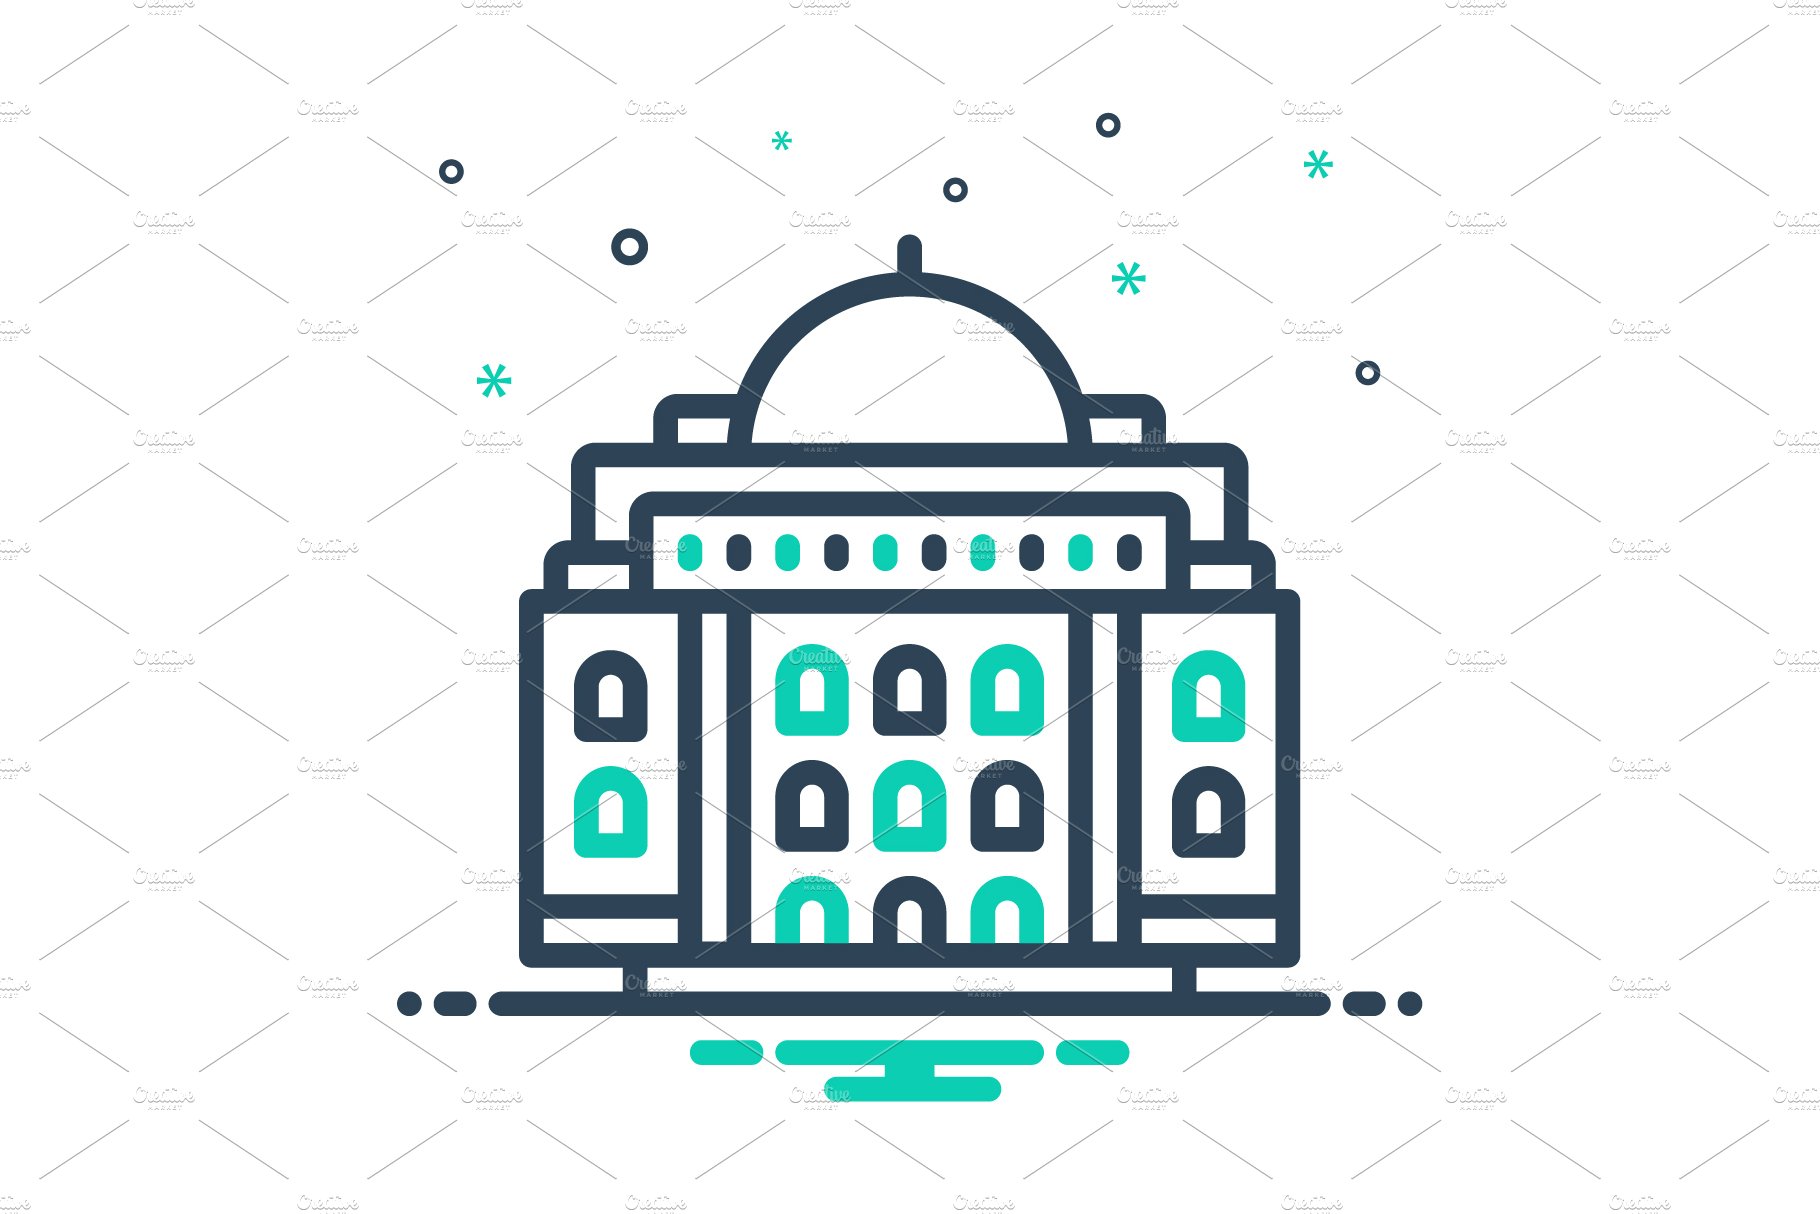 Legislature assembly mix icon cover image.